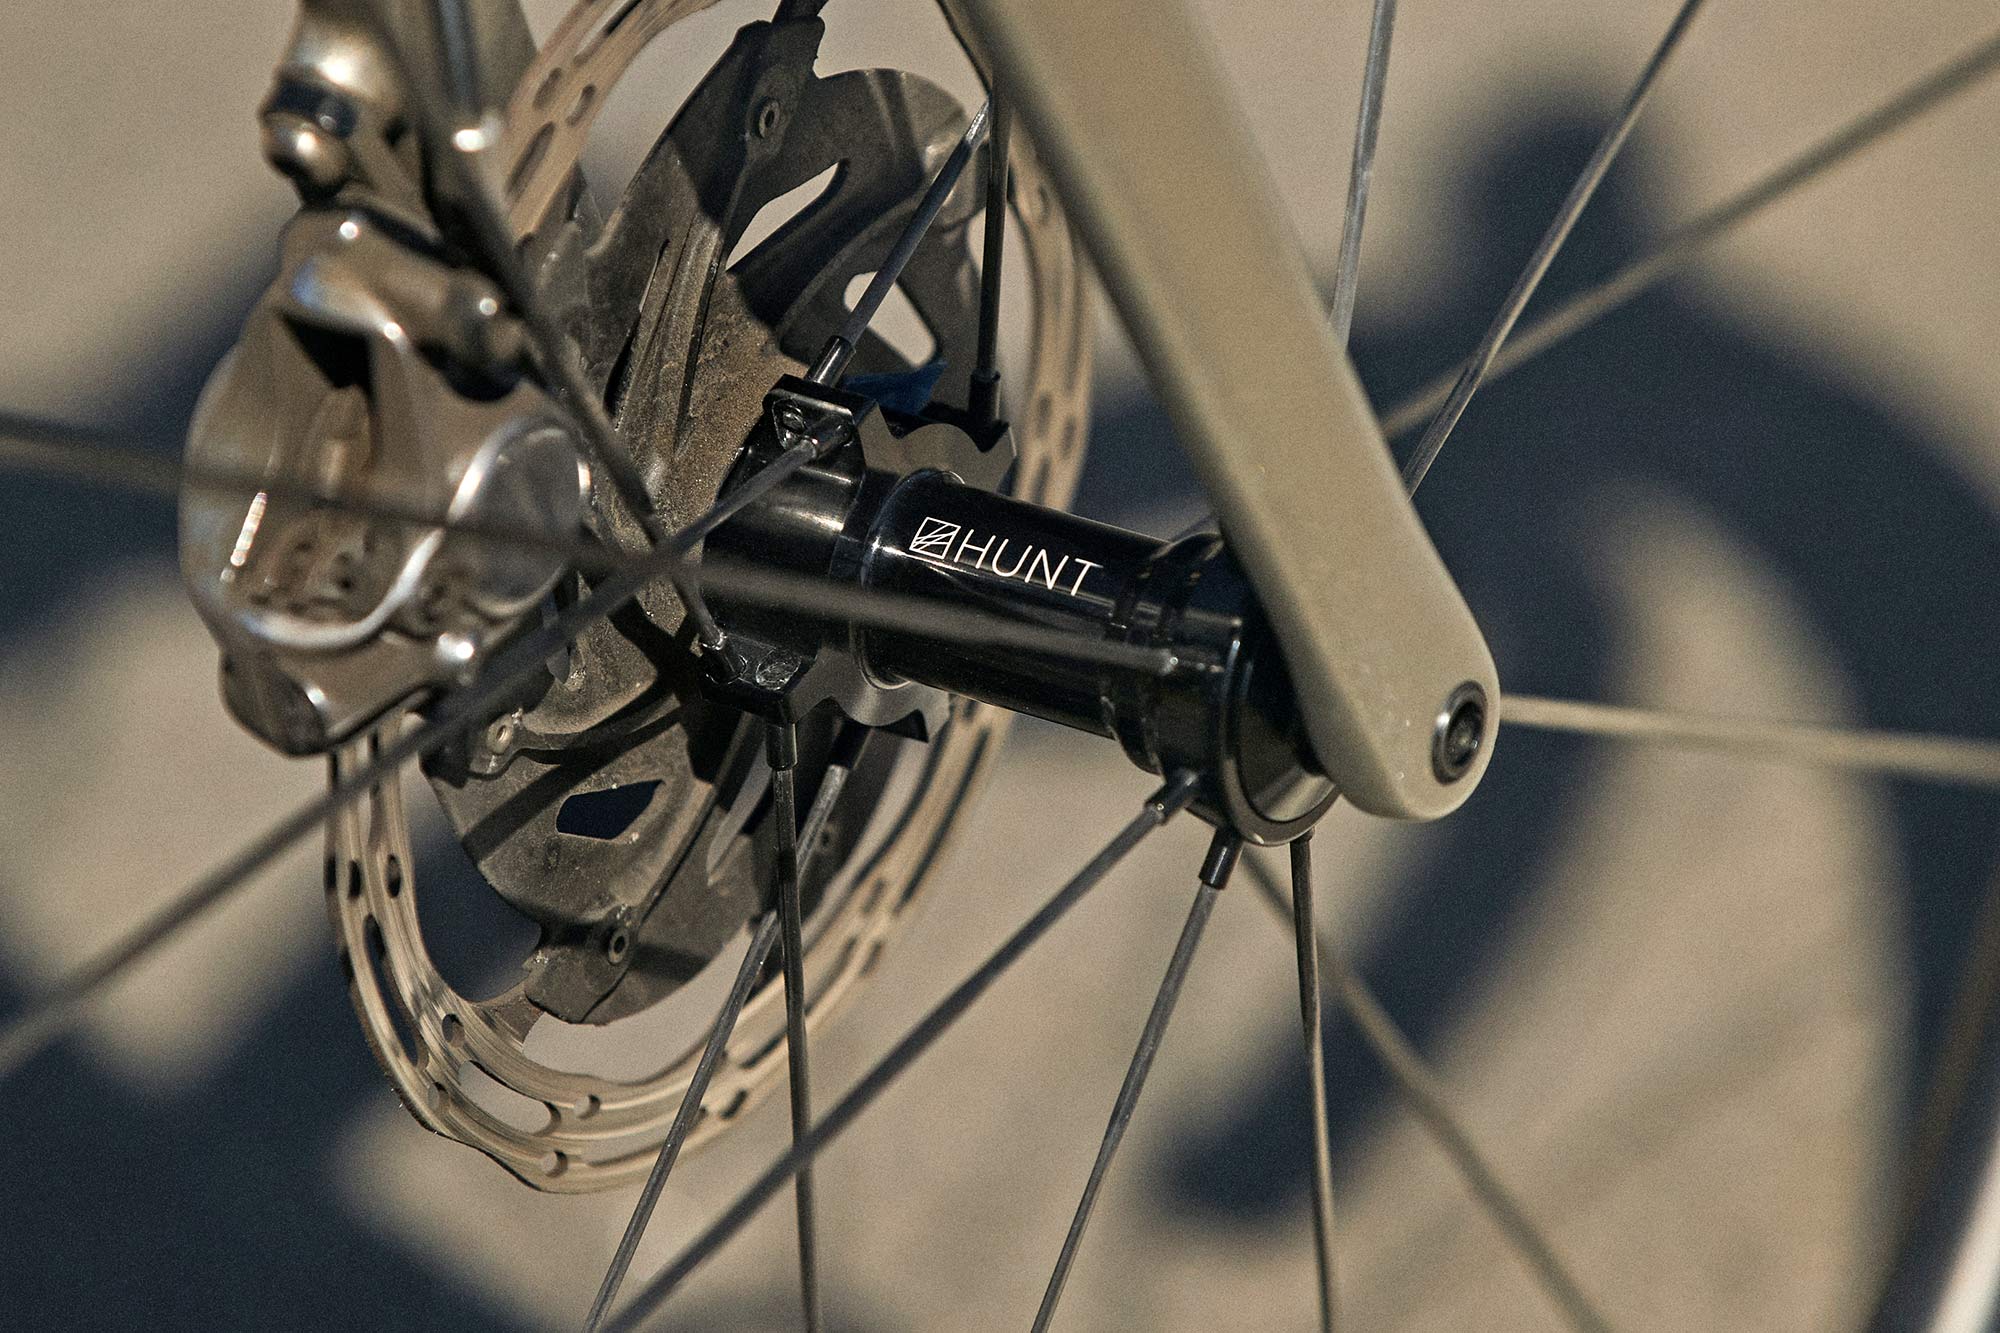 Hunt 32 Aerodynamicist UD Carbon Spoke Disc road bike wheels, photo by Dominique Powers, front hub & spoke detail